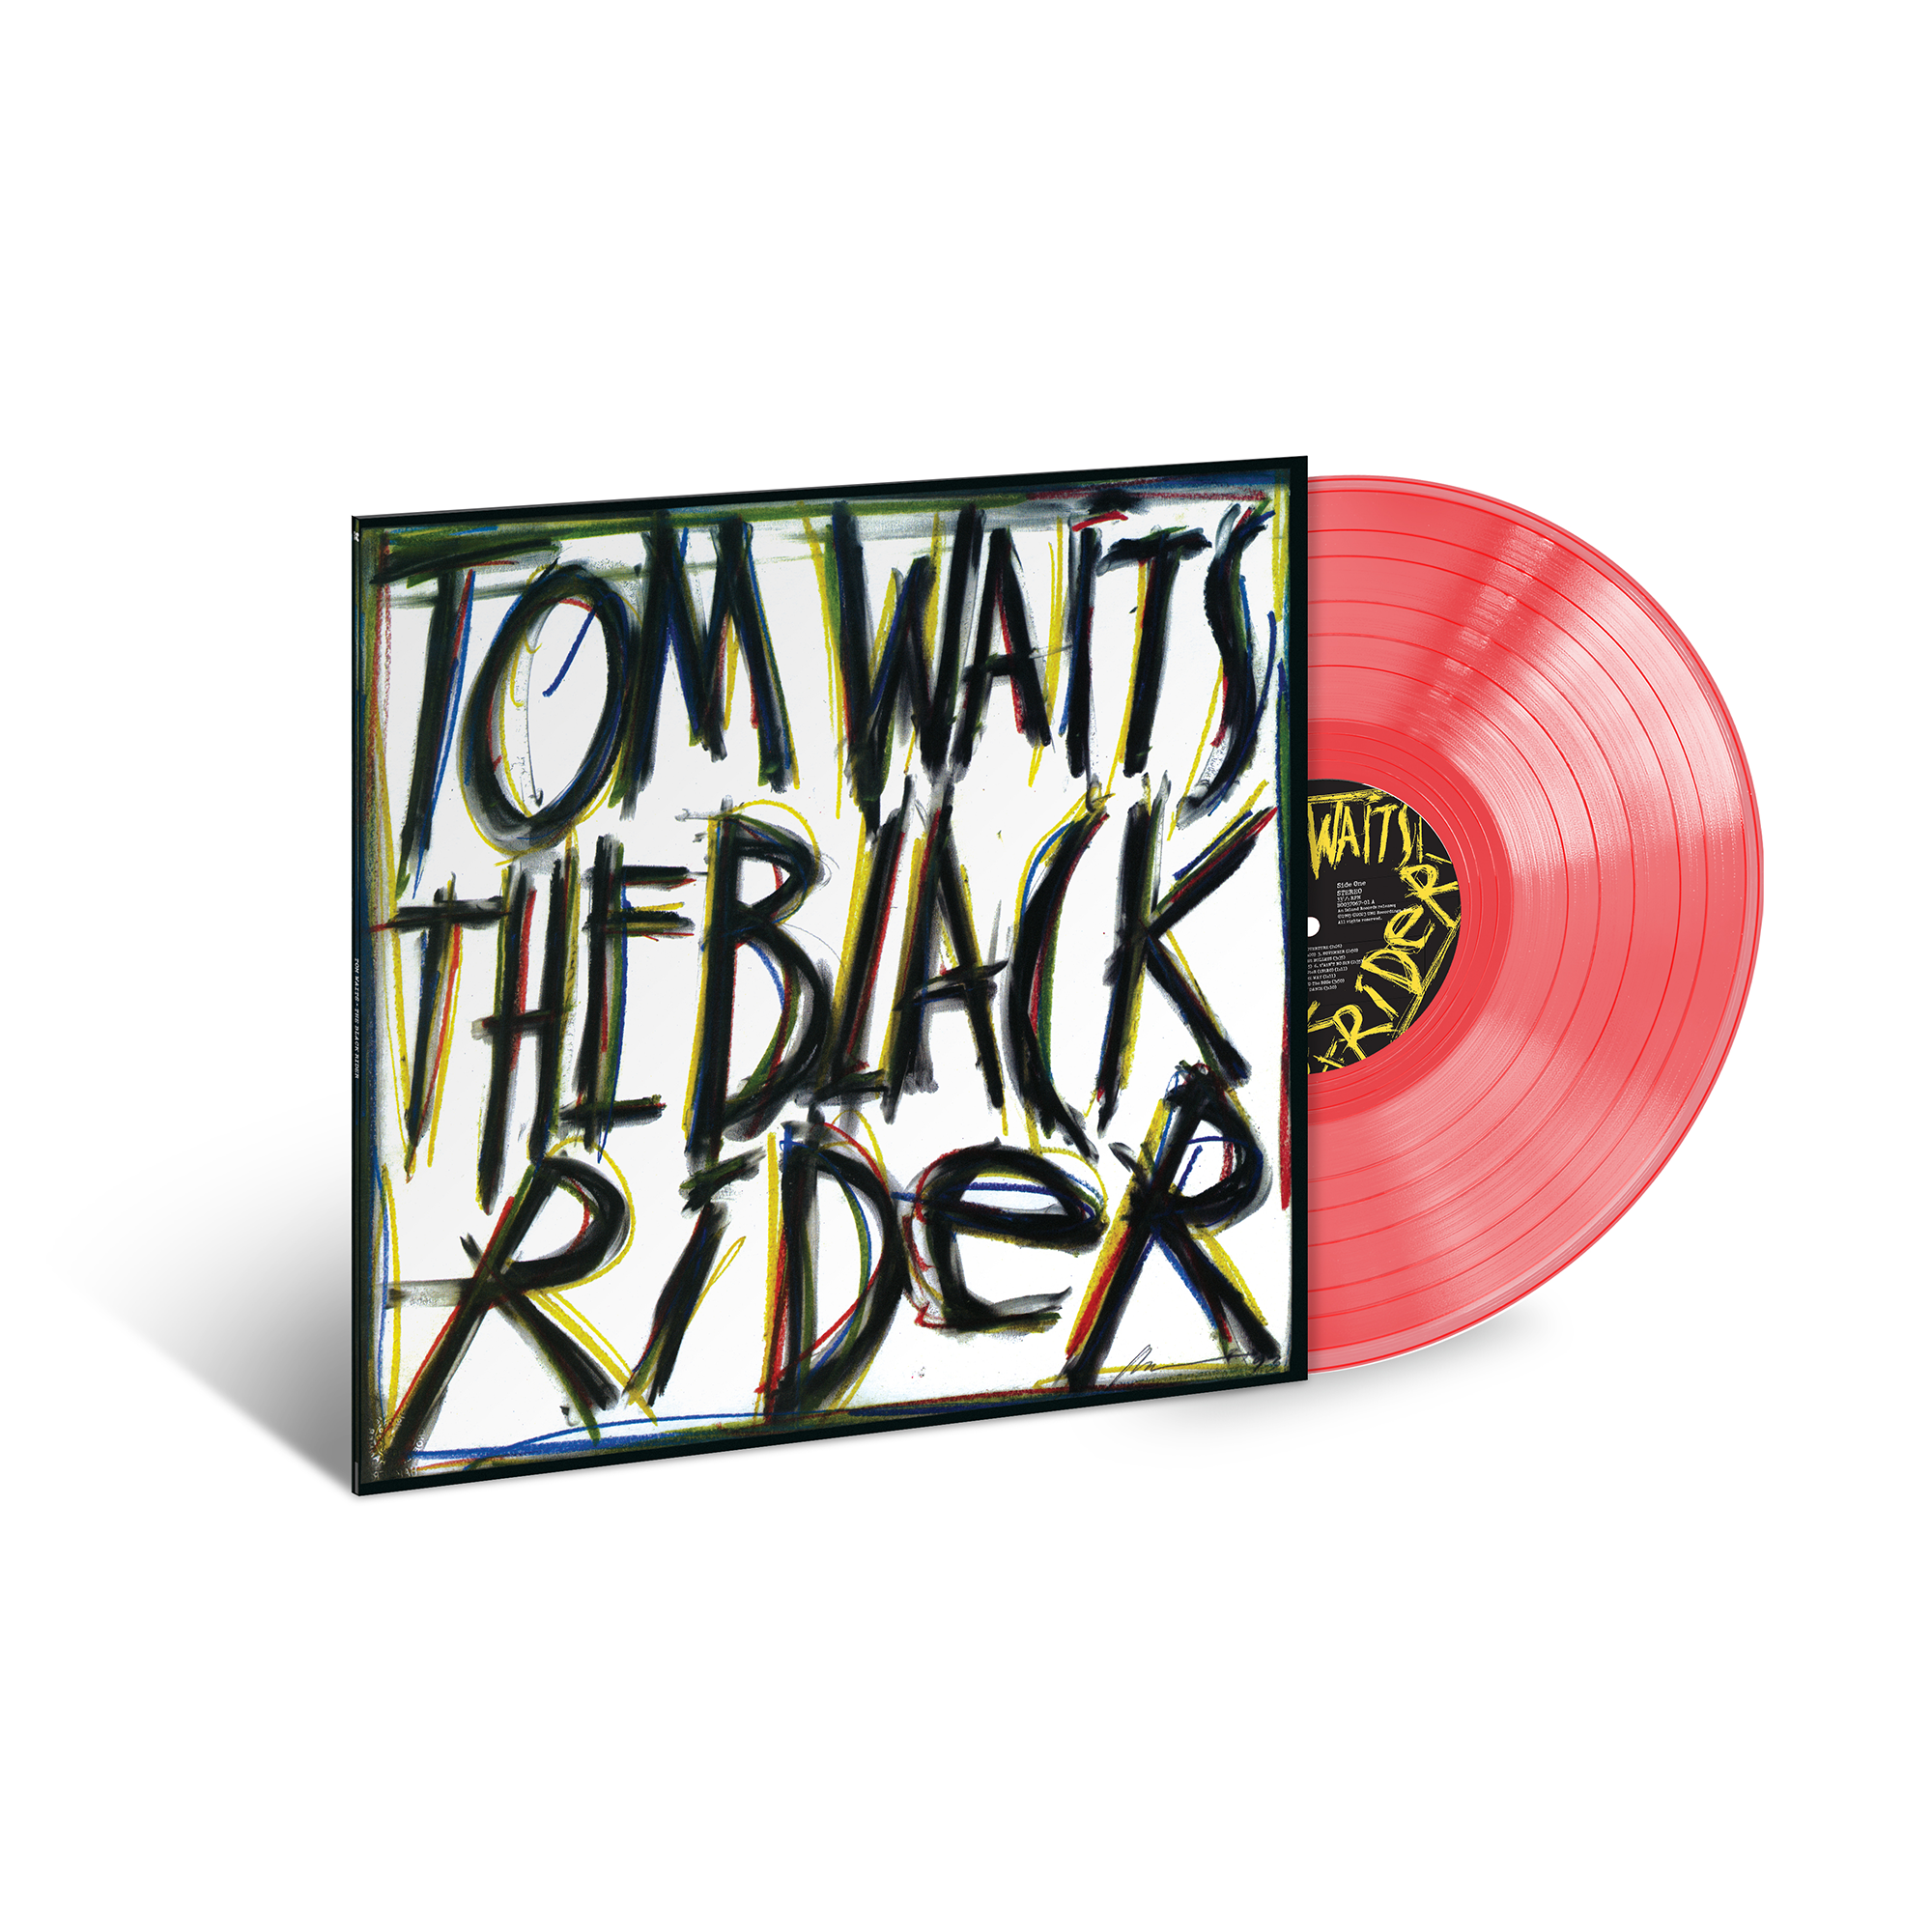 Tom Waits - The Black Rider: Limited Opaque Apple Colour Vinyl LP